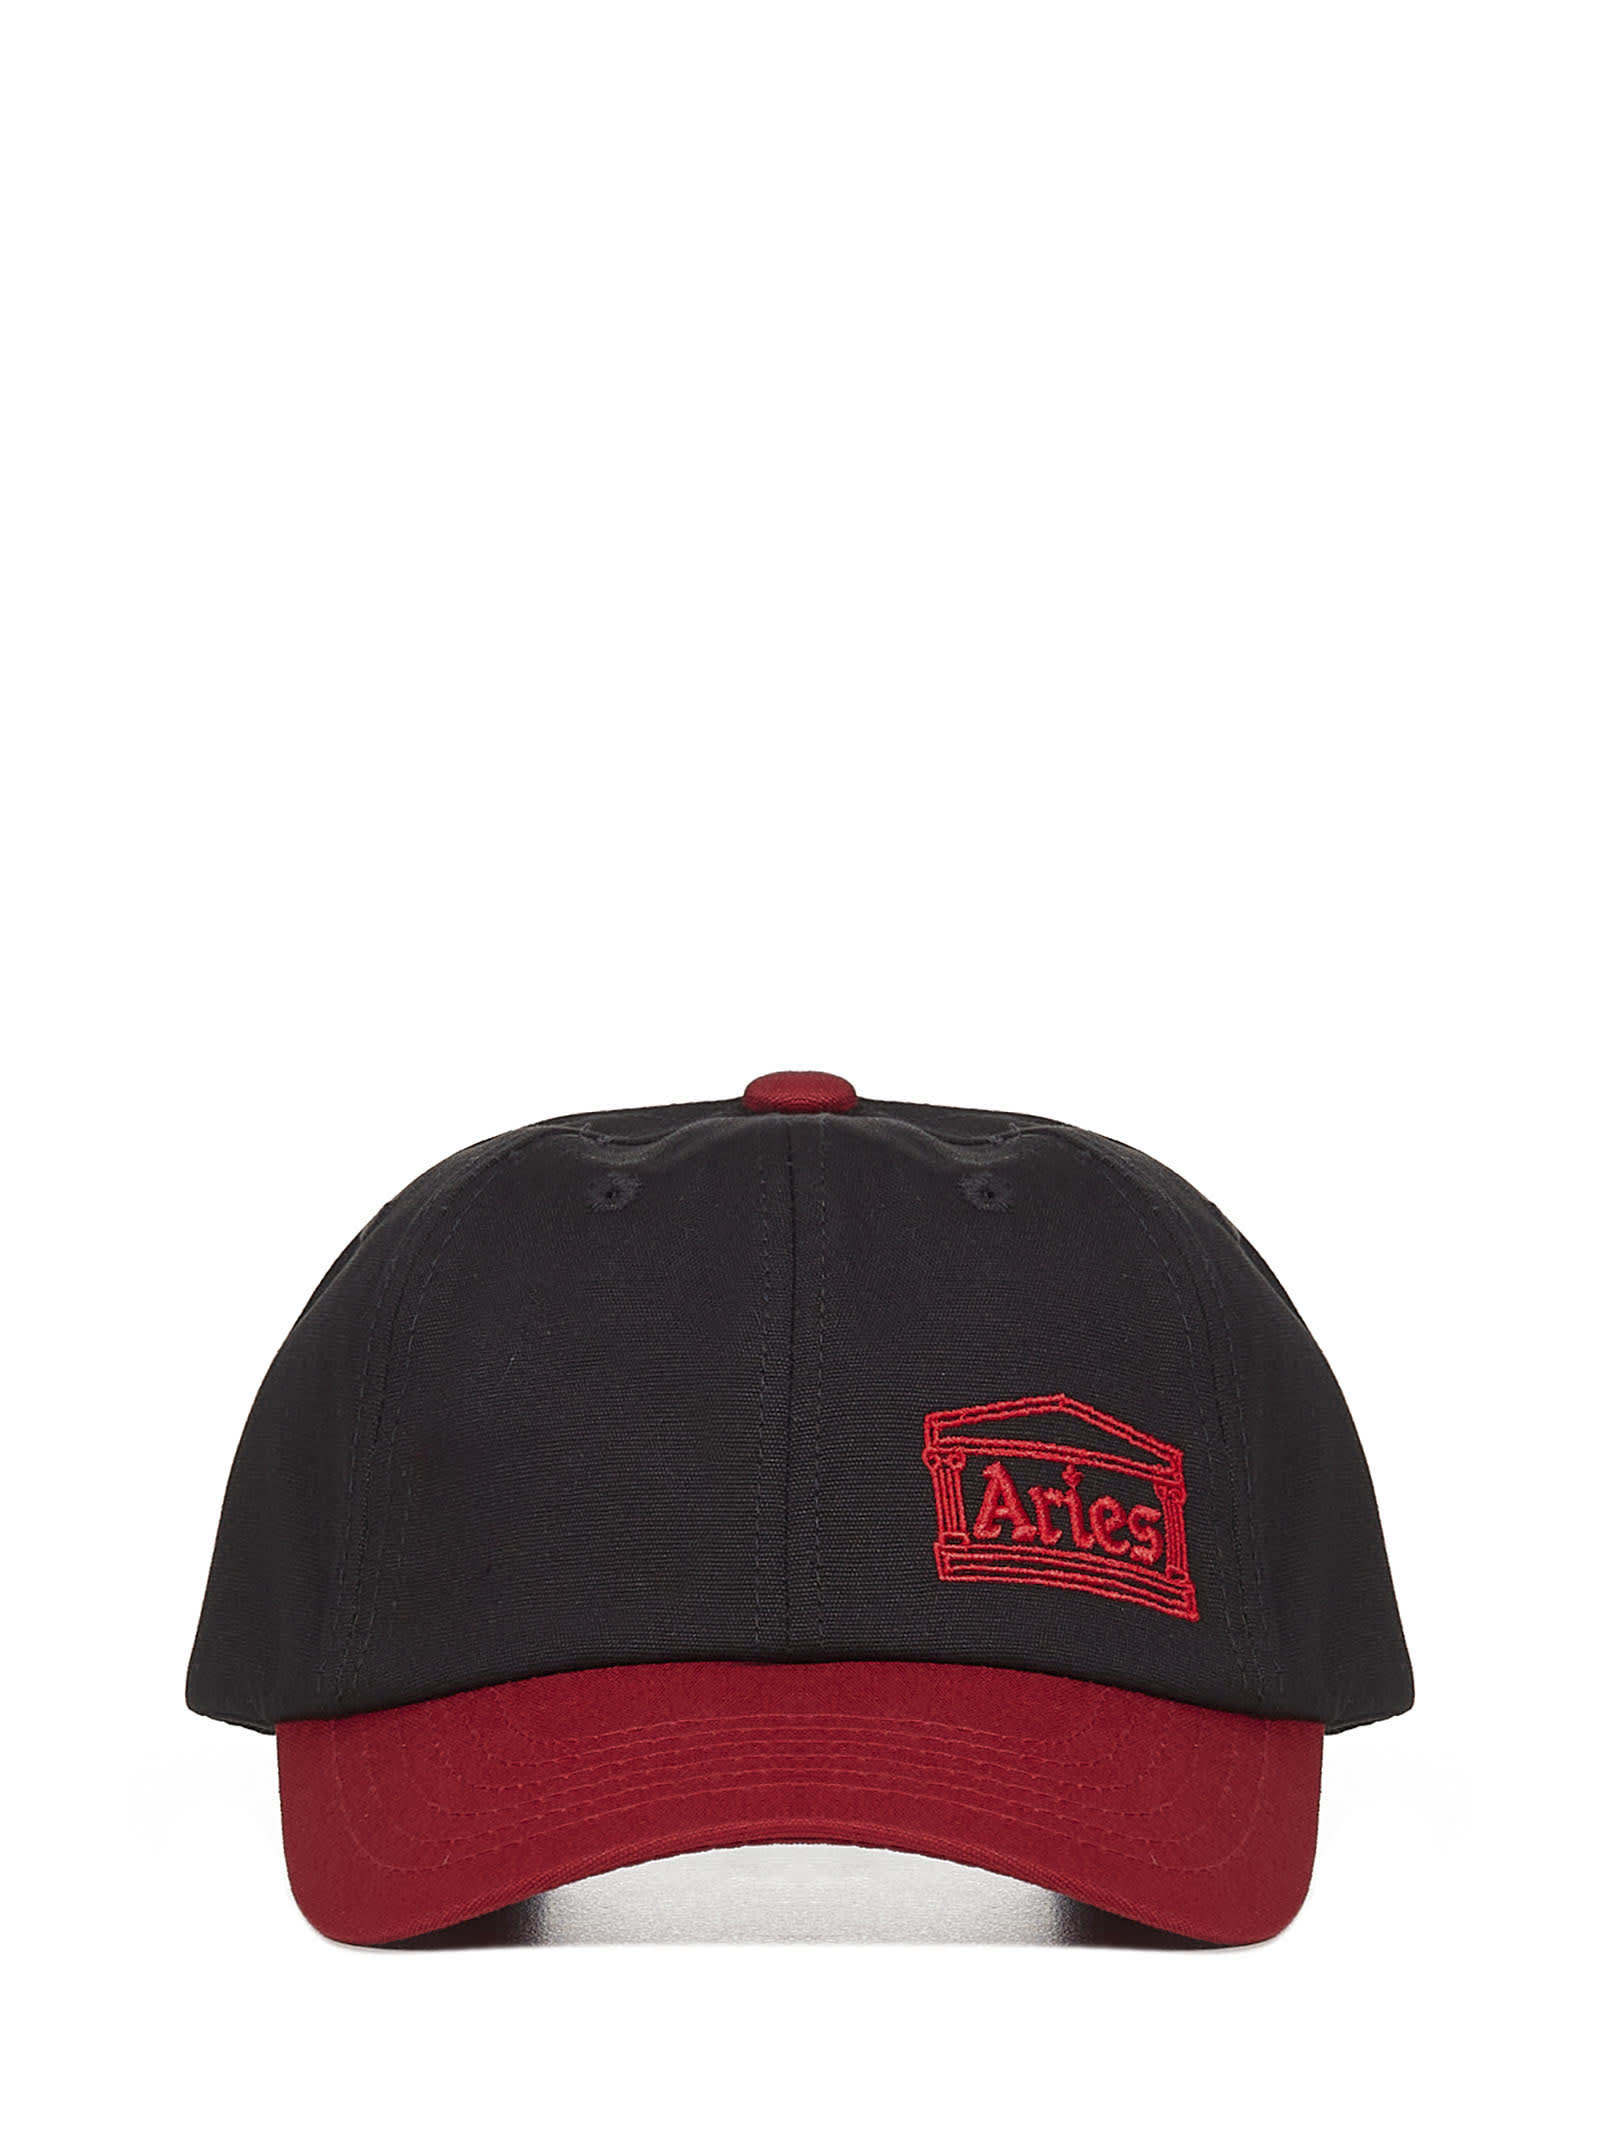 Aries Temple Label Hat